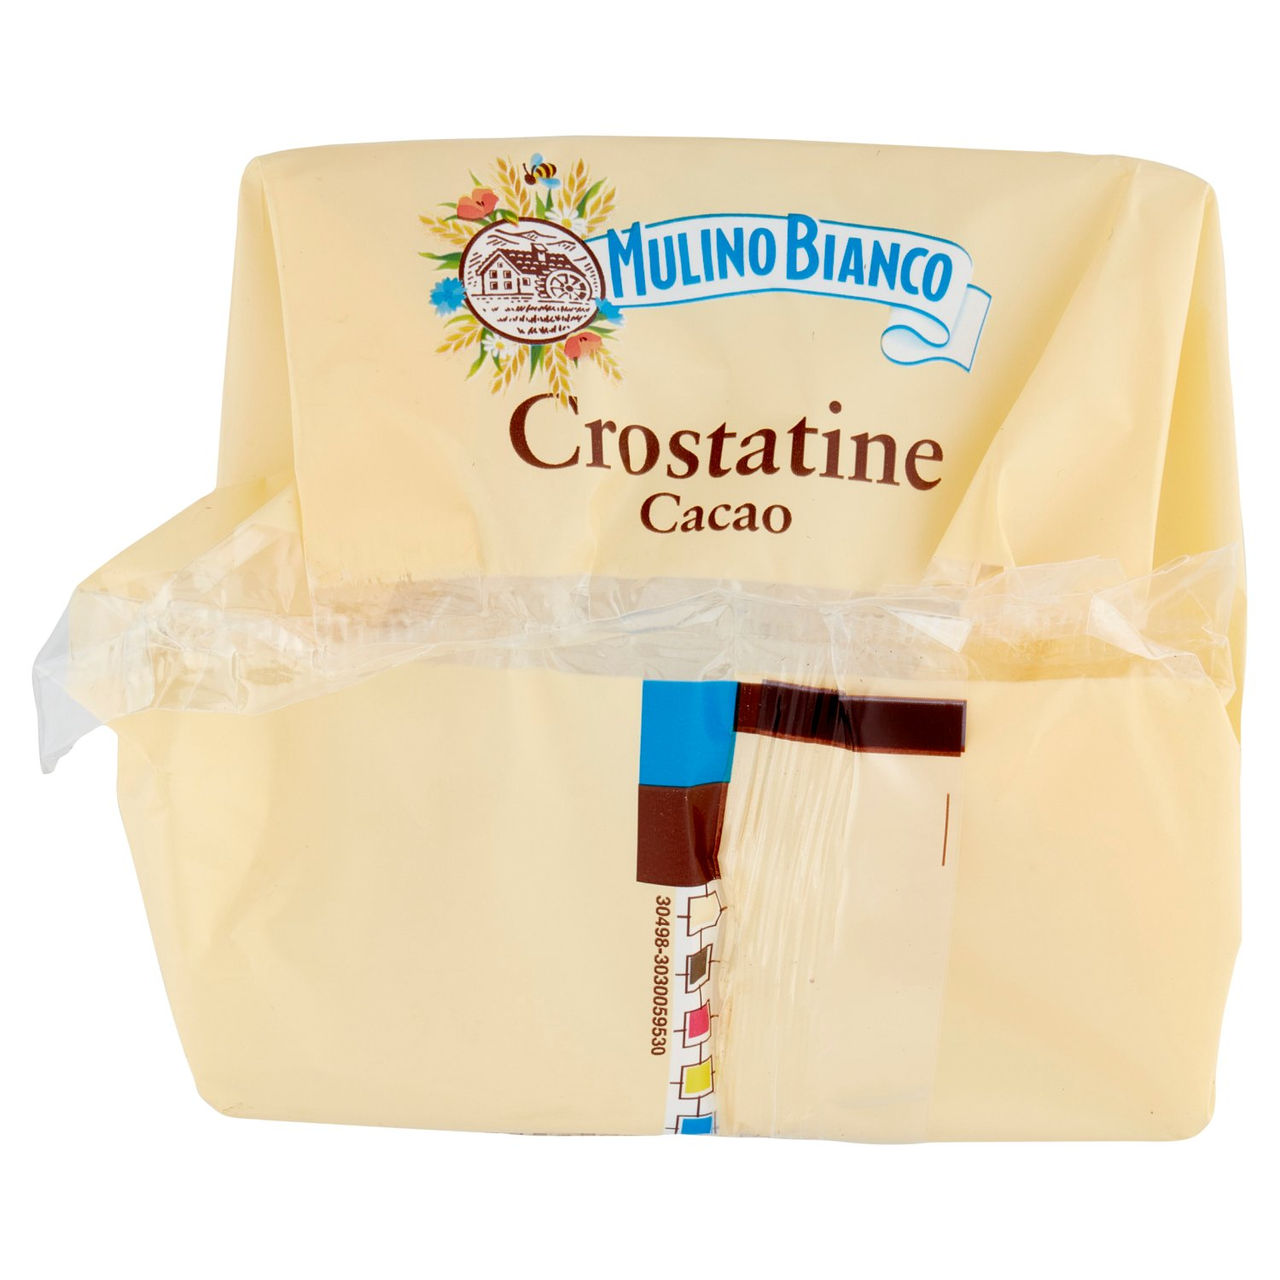 Mulino Bianco Crostatine Cacao in vendita online